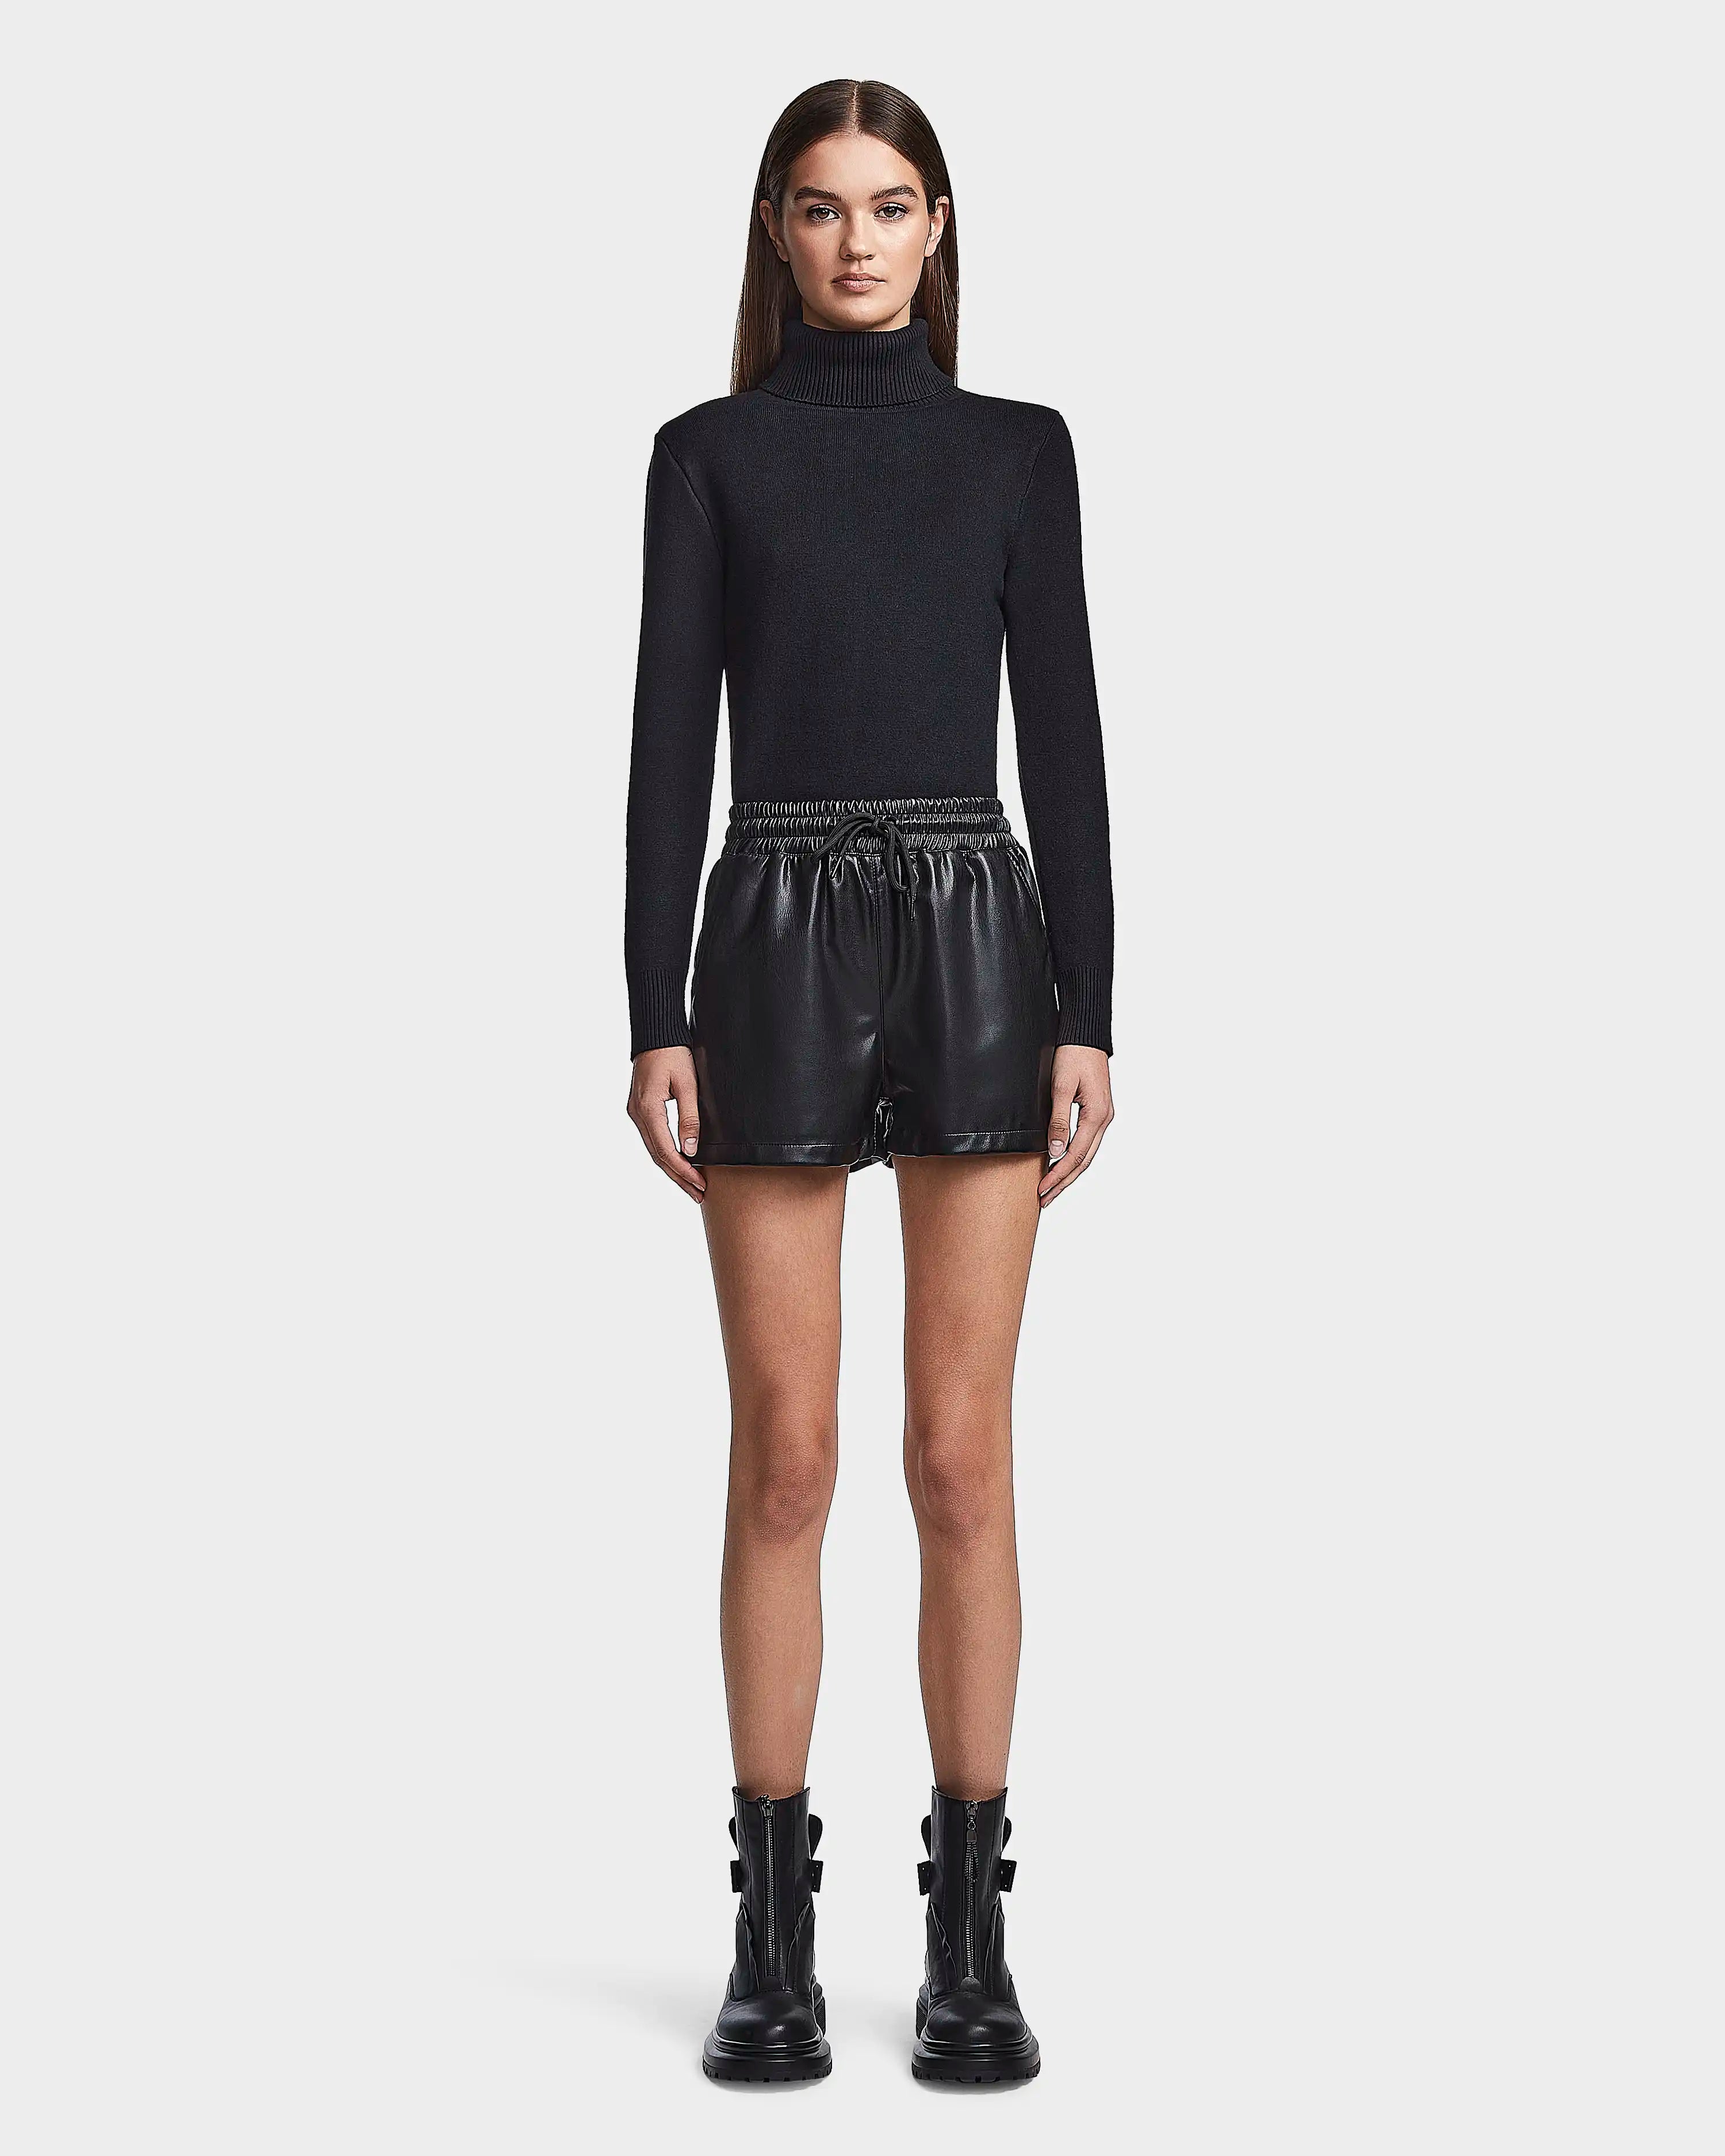 Black Leather Shorts, Leather Shorts, Leather, Shorts, Real